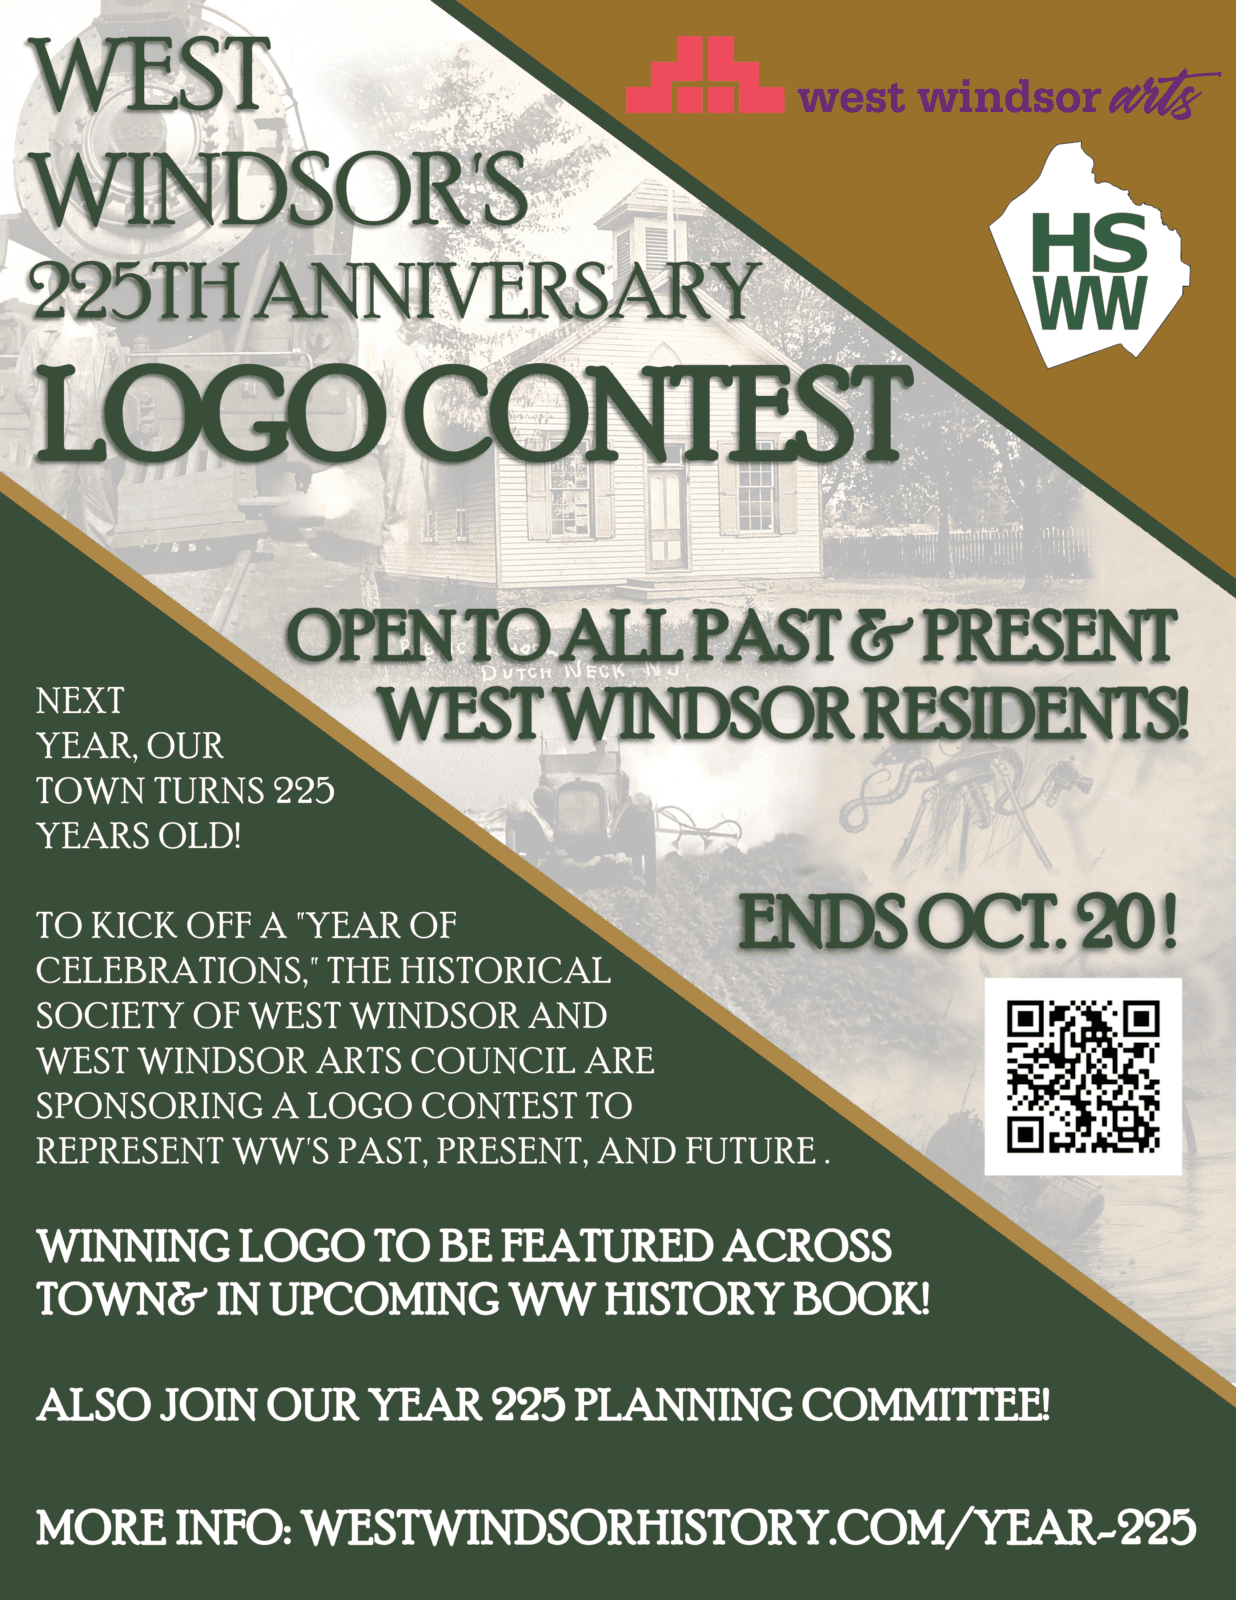 West Windsor's 225 Anniversary Logo Contest